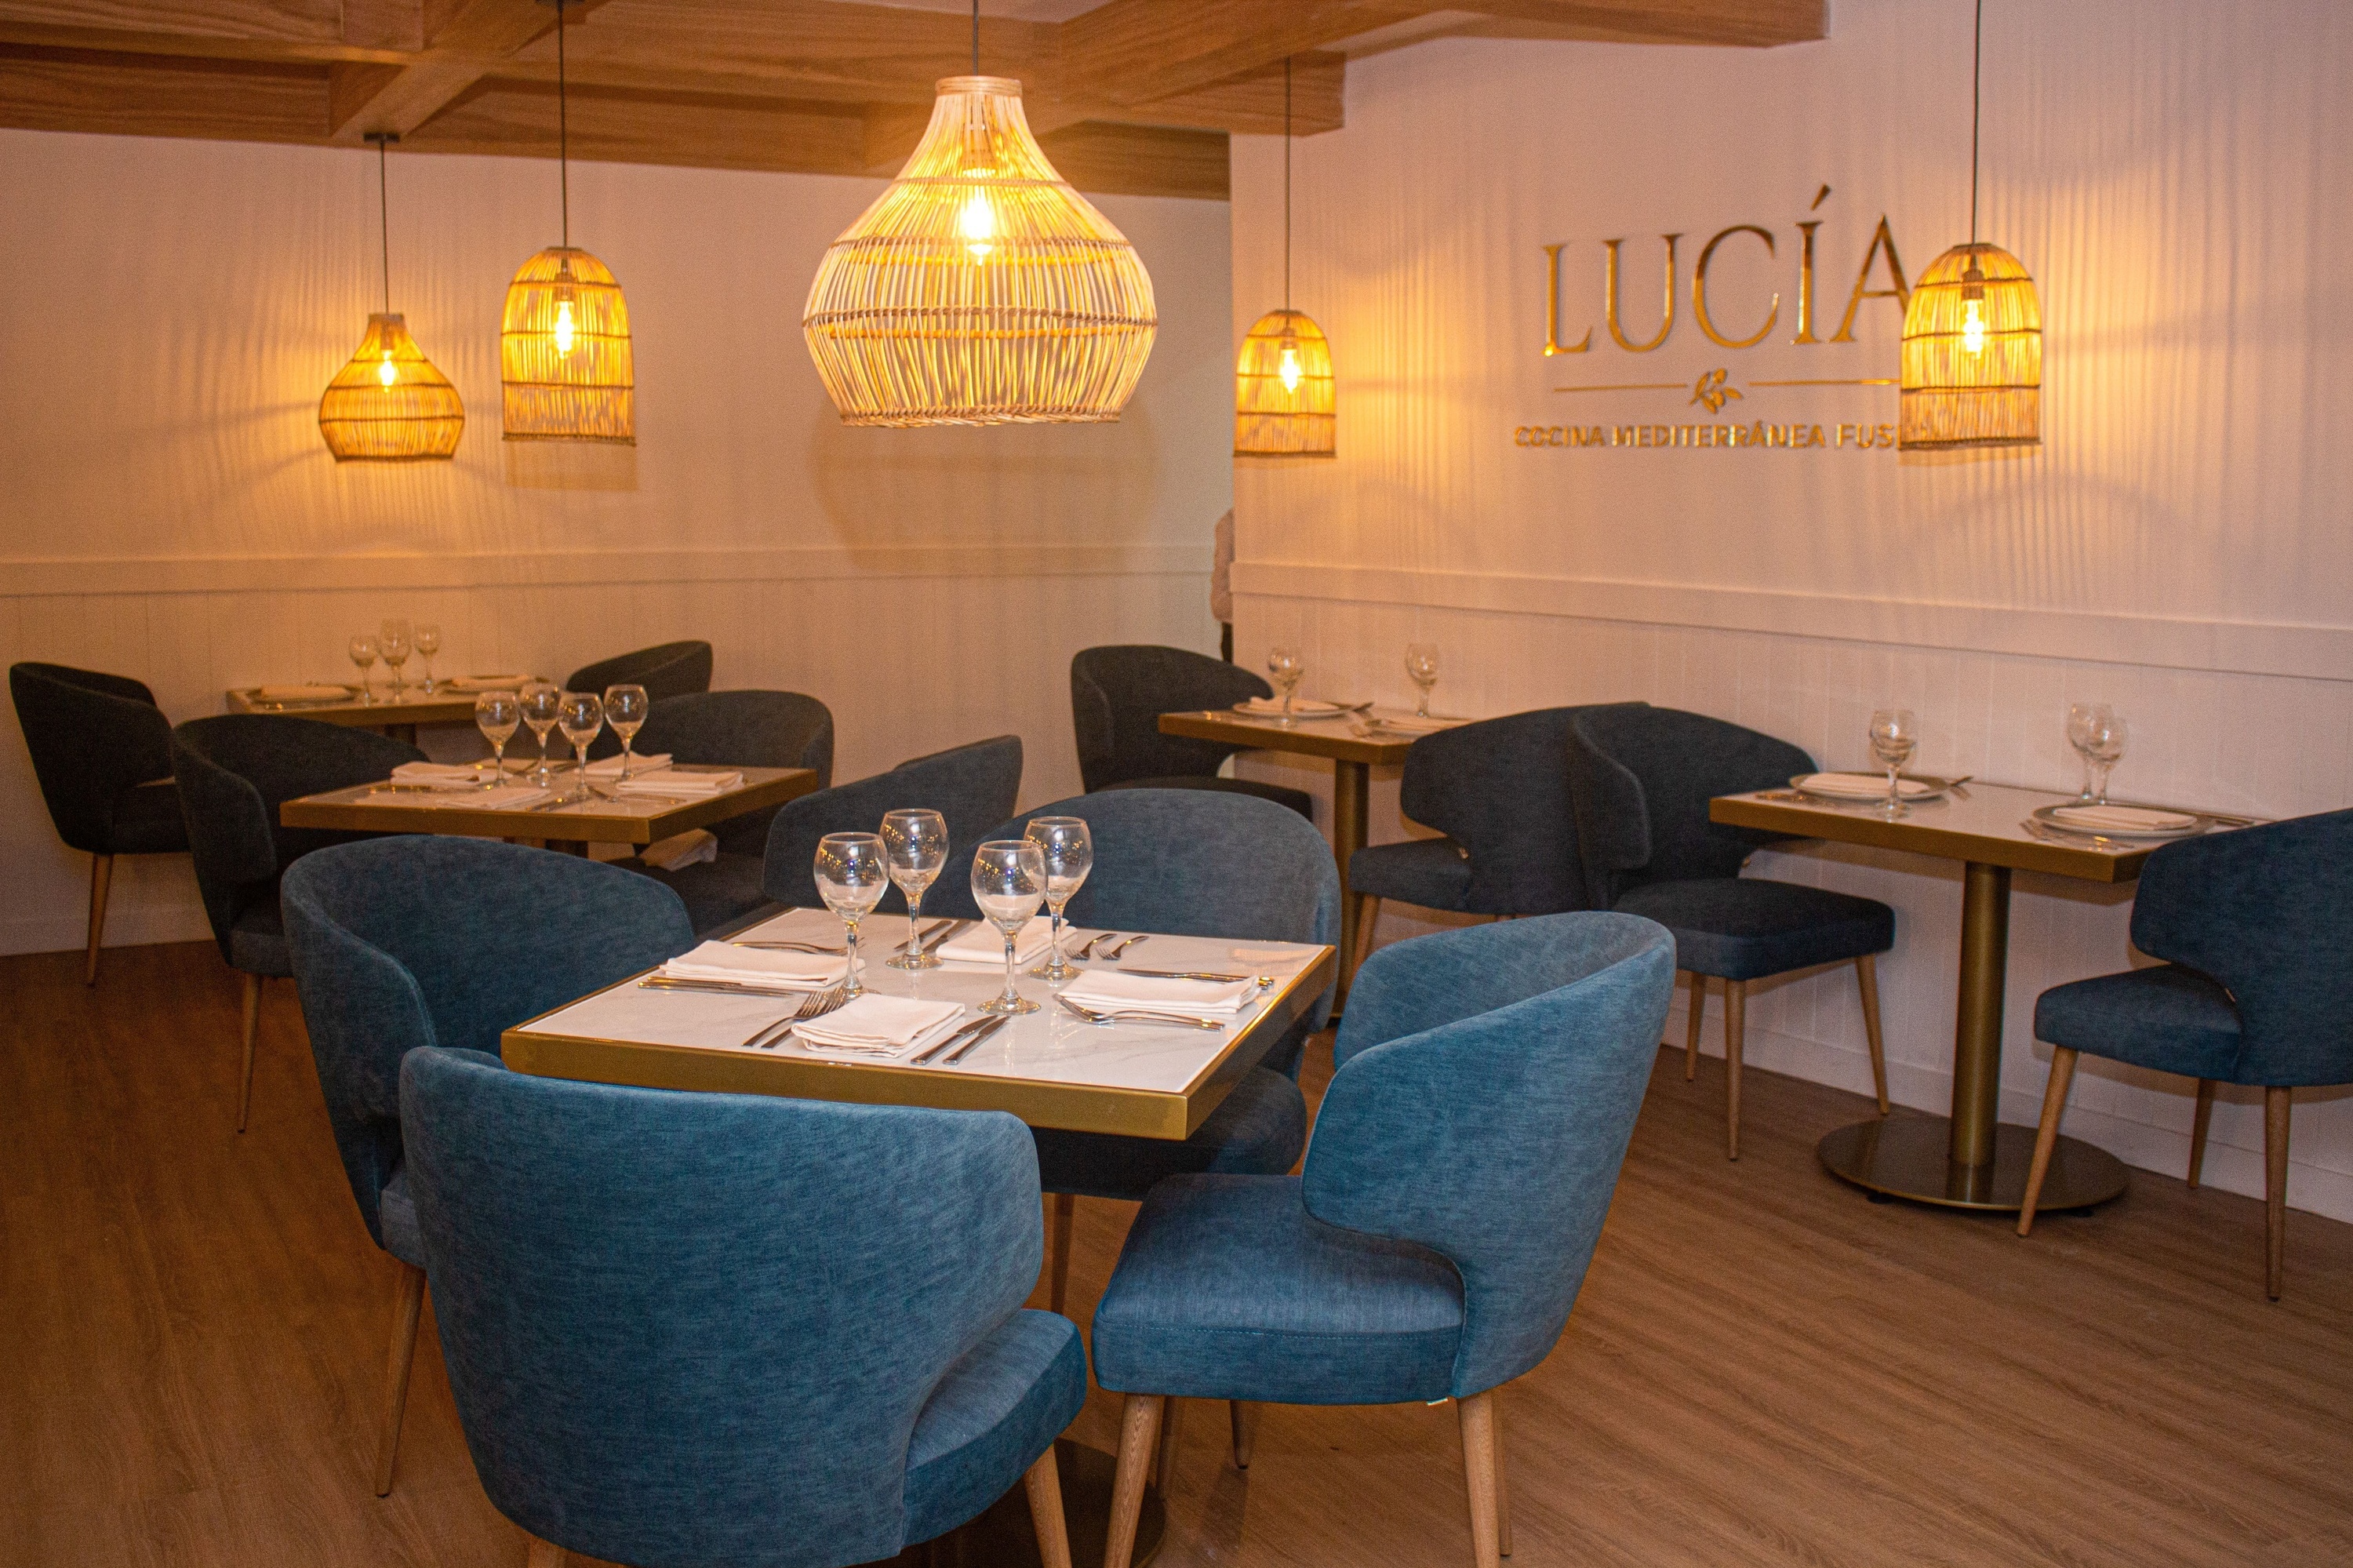 Lucia Restaurante